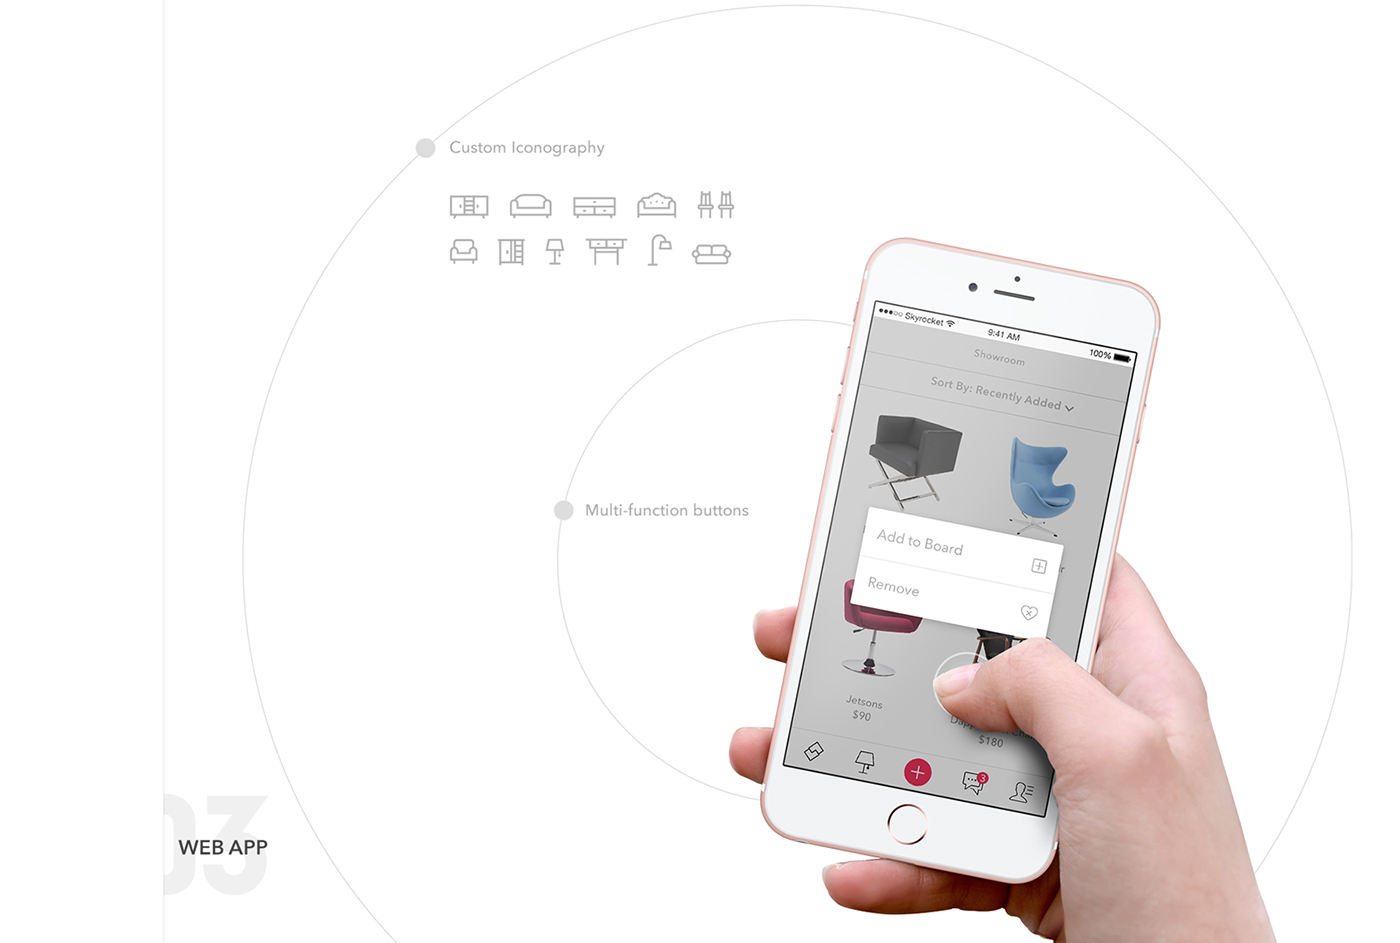 kabuni app branding  identity interior design  web app ios brand strategy product design 